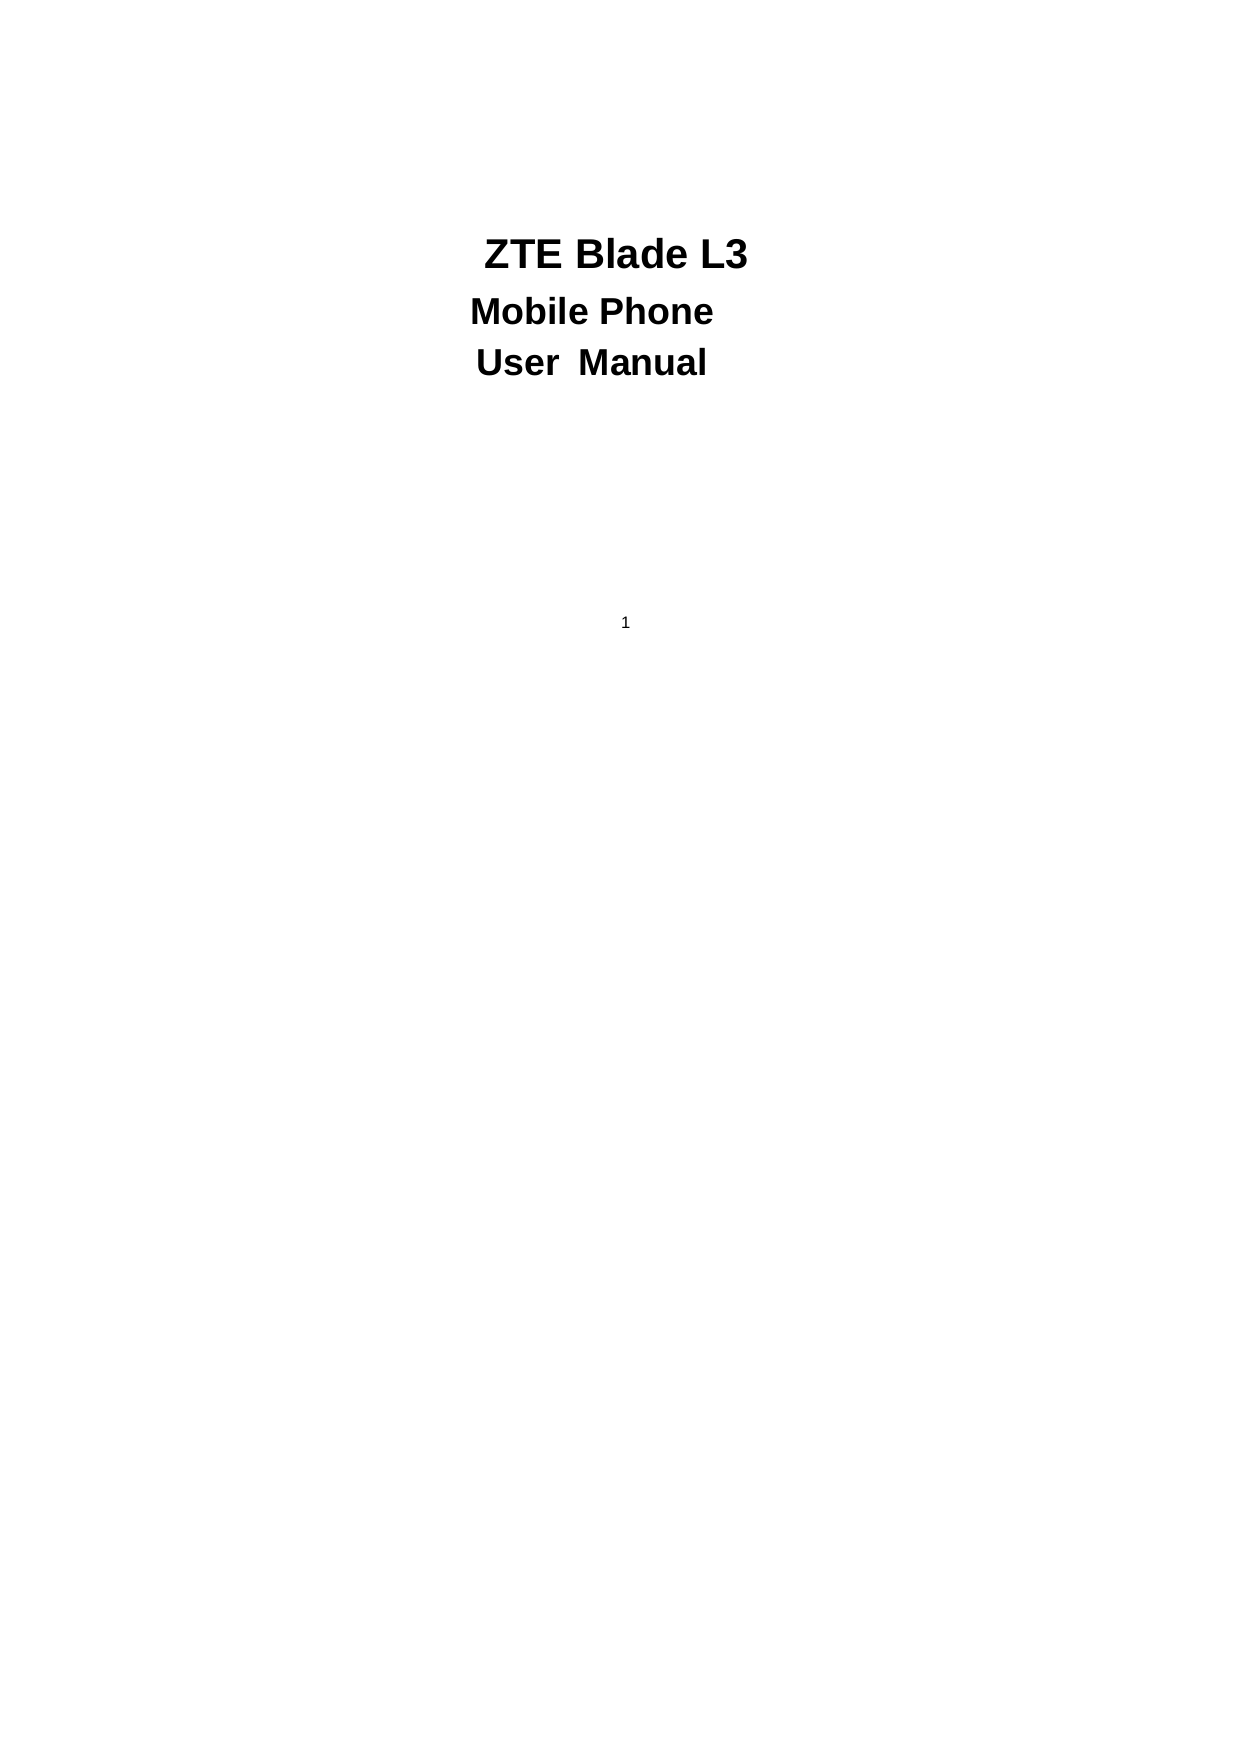 1     ZTE Blade L3 Mobile Phone User Manual   